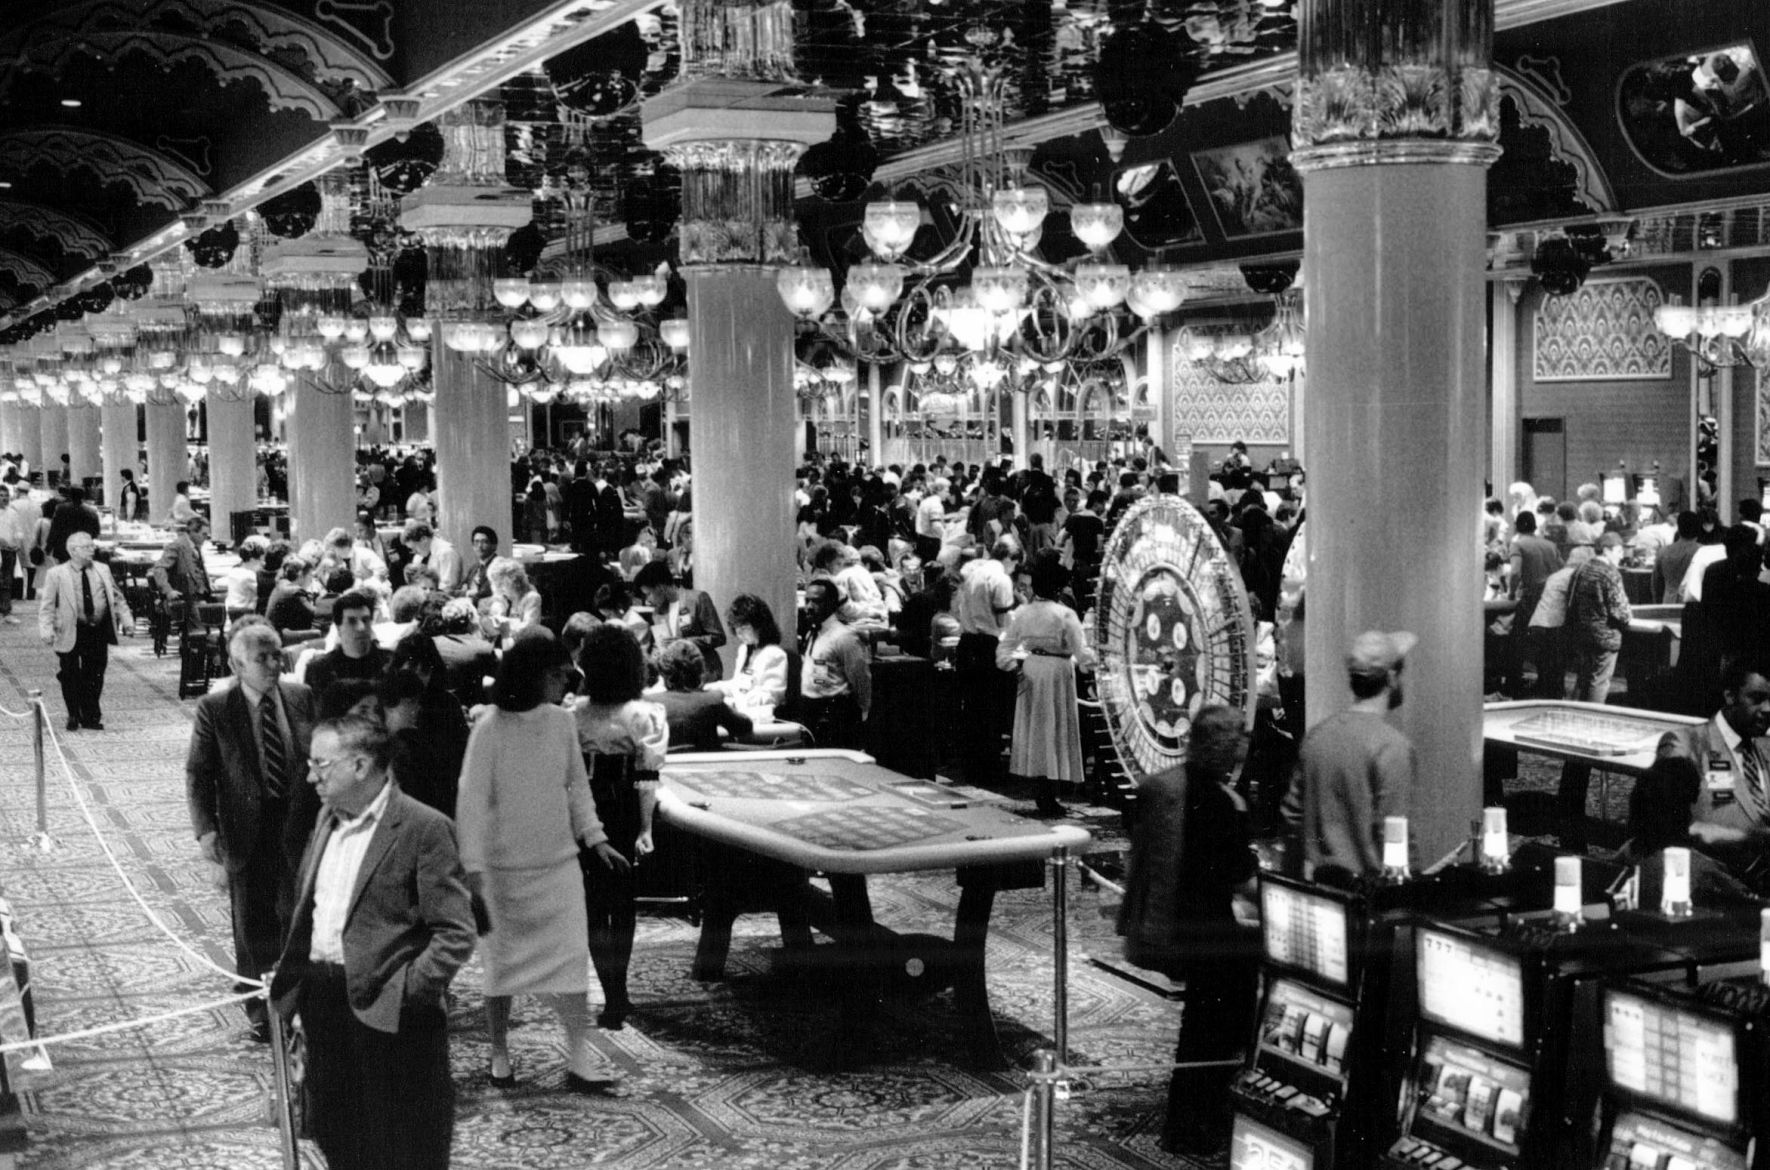 showboat casino in atlantic city